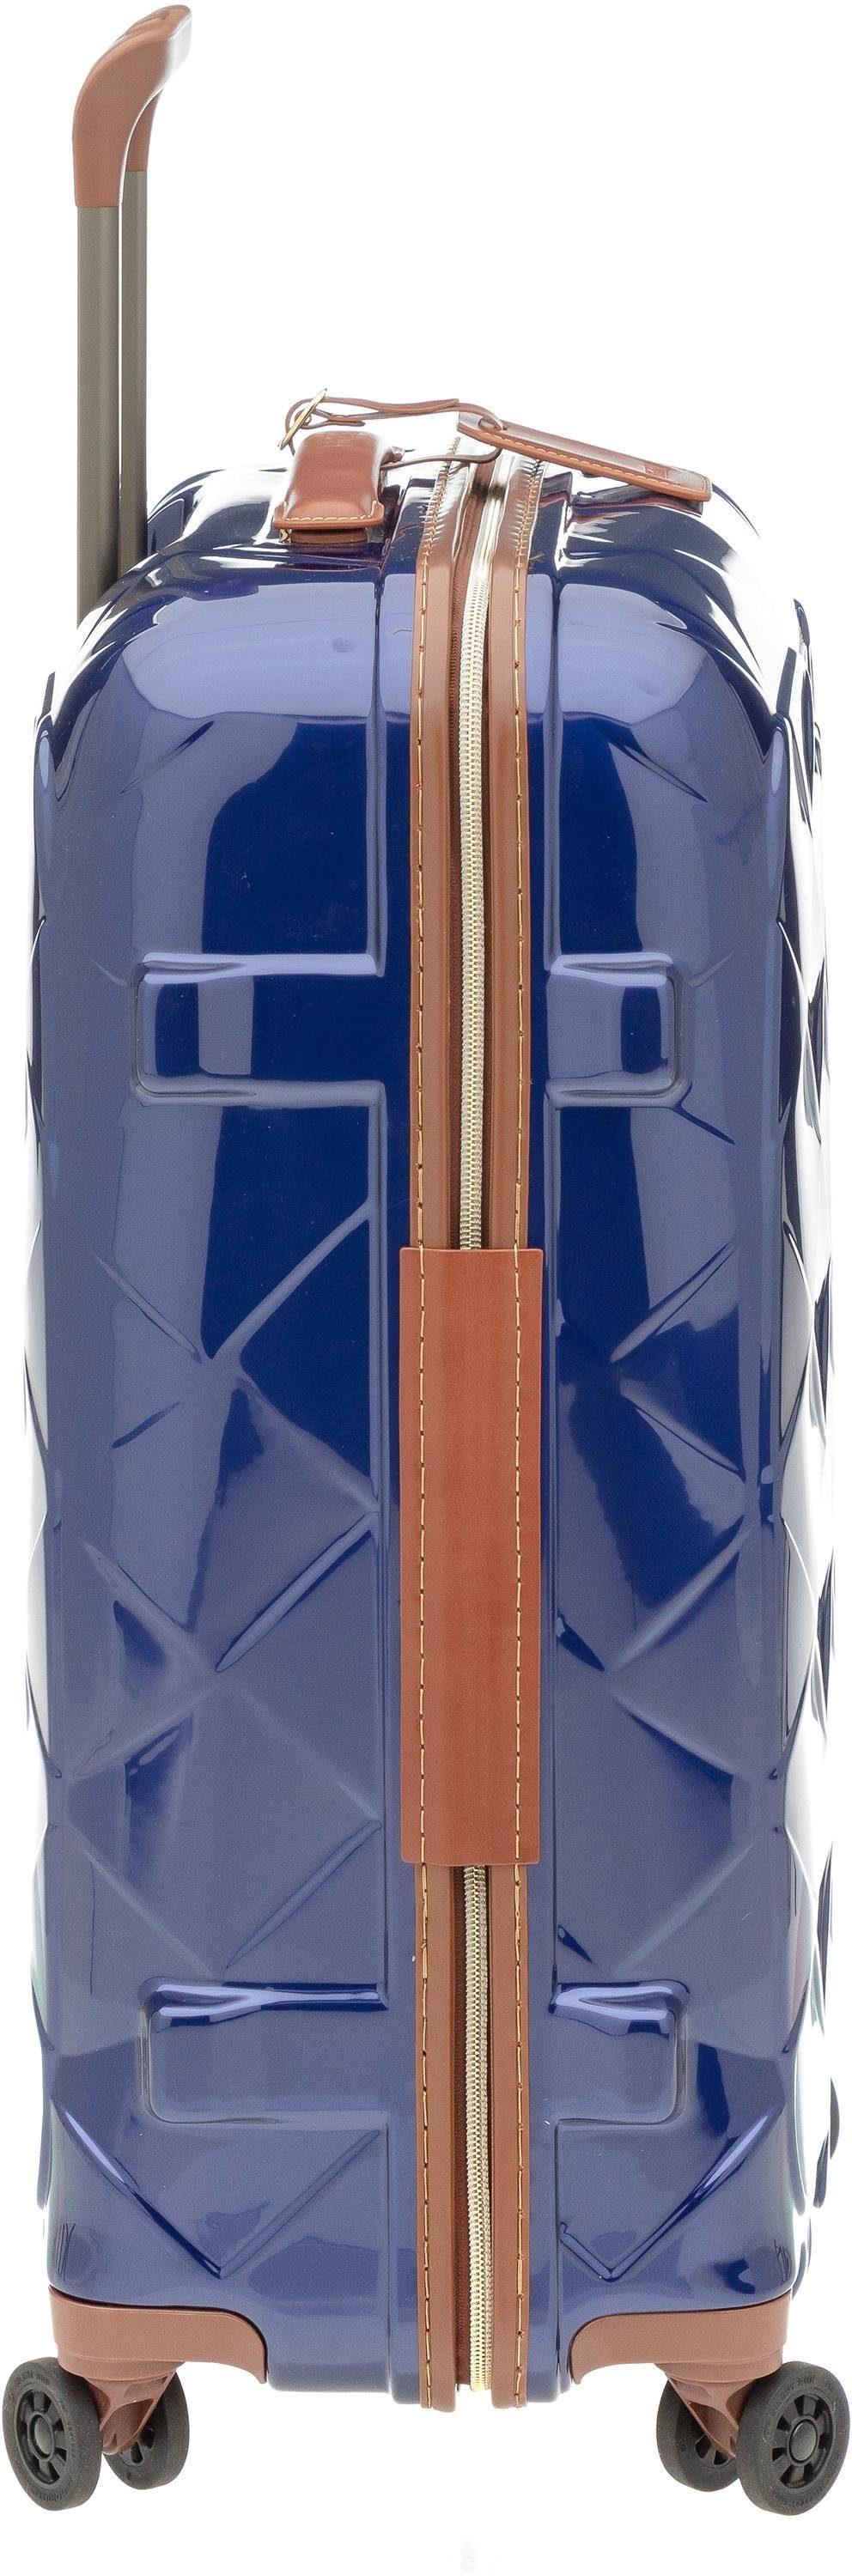 Stratic 76 cm, Leather & Rollen More, Hartschalen-Trolley blue 4